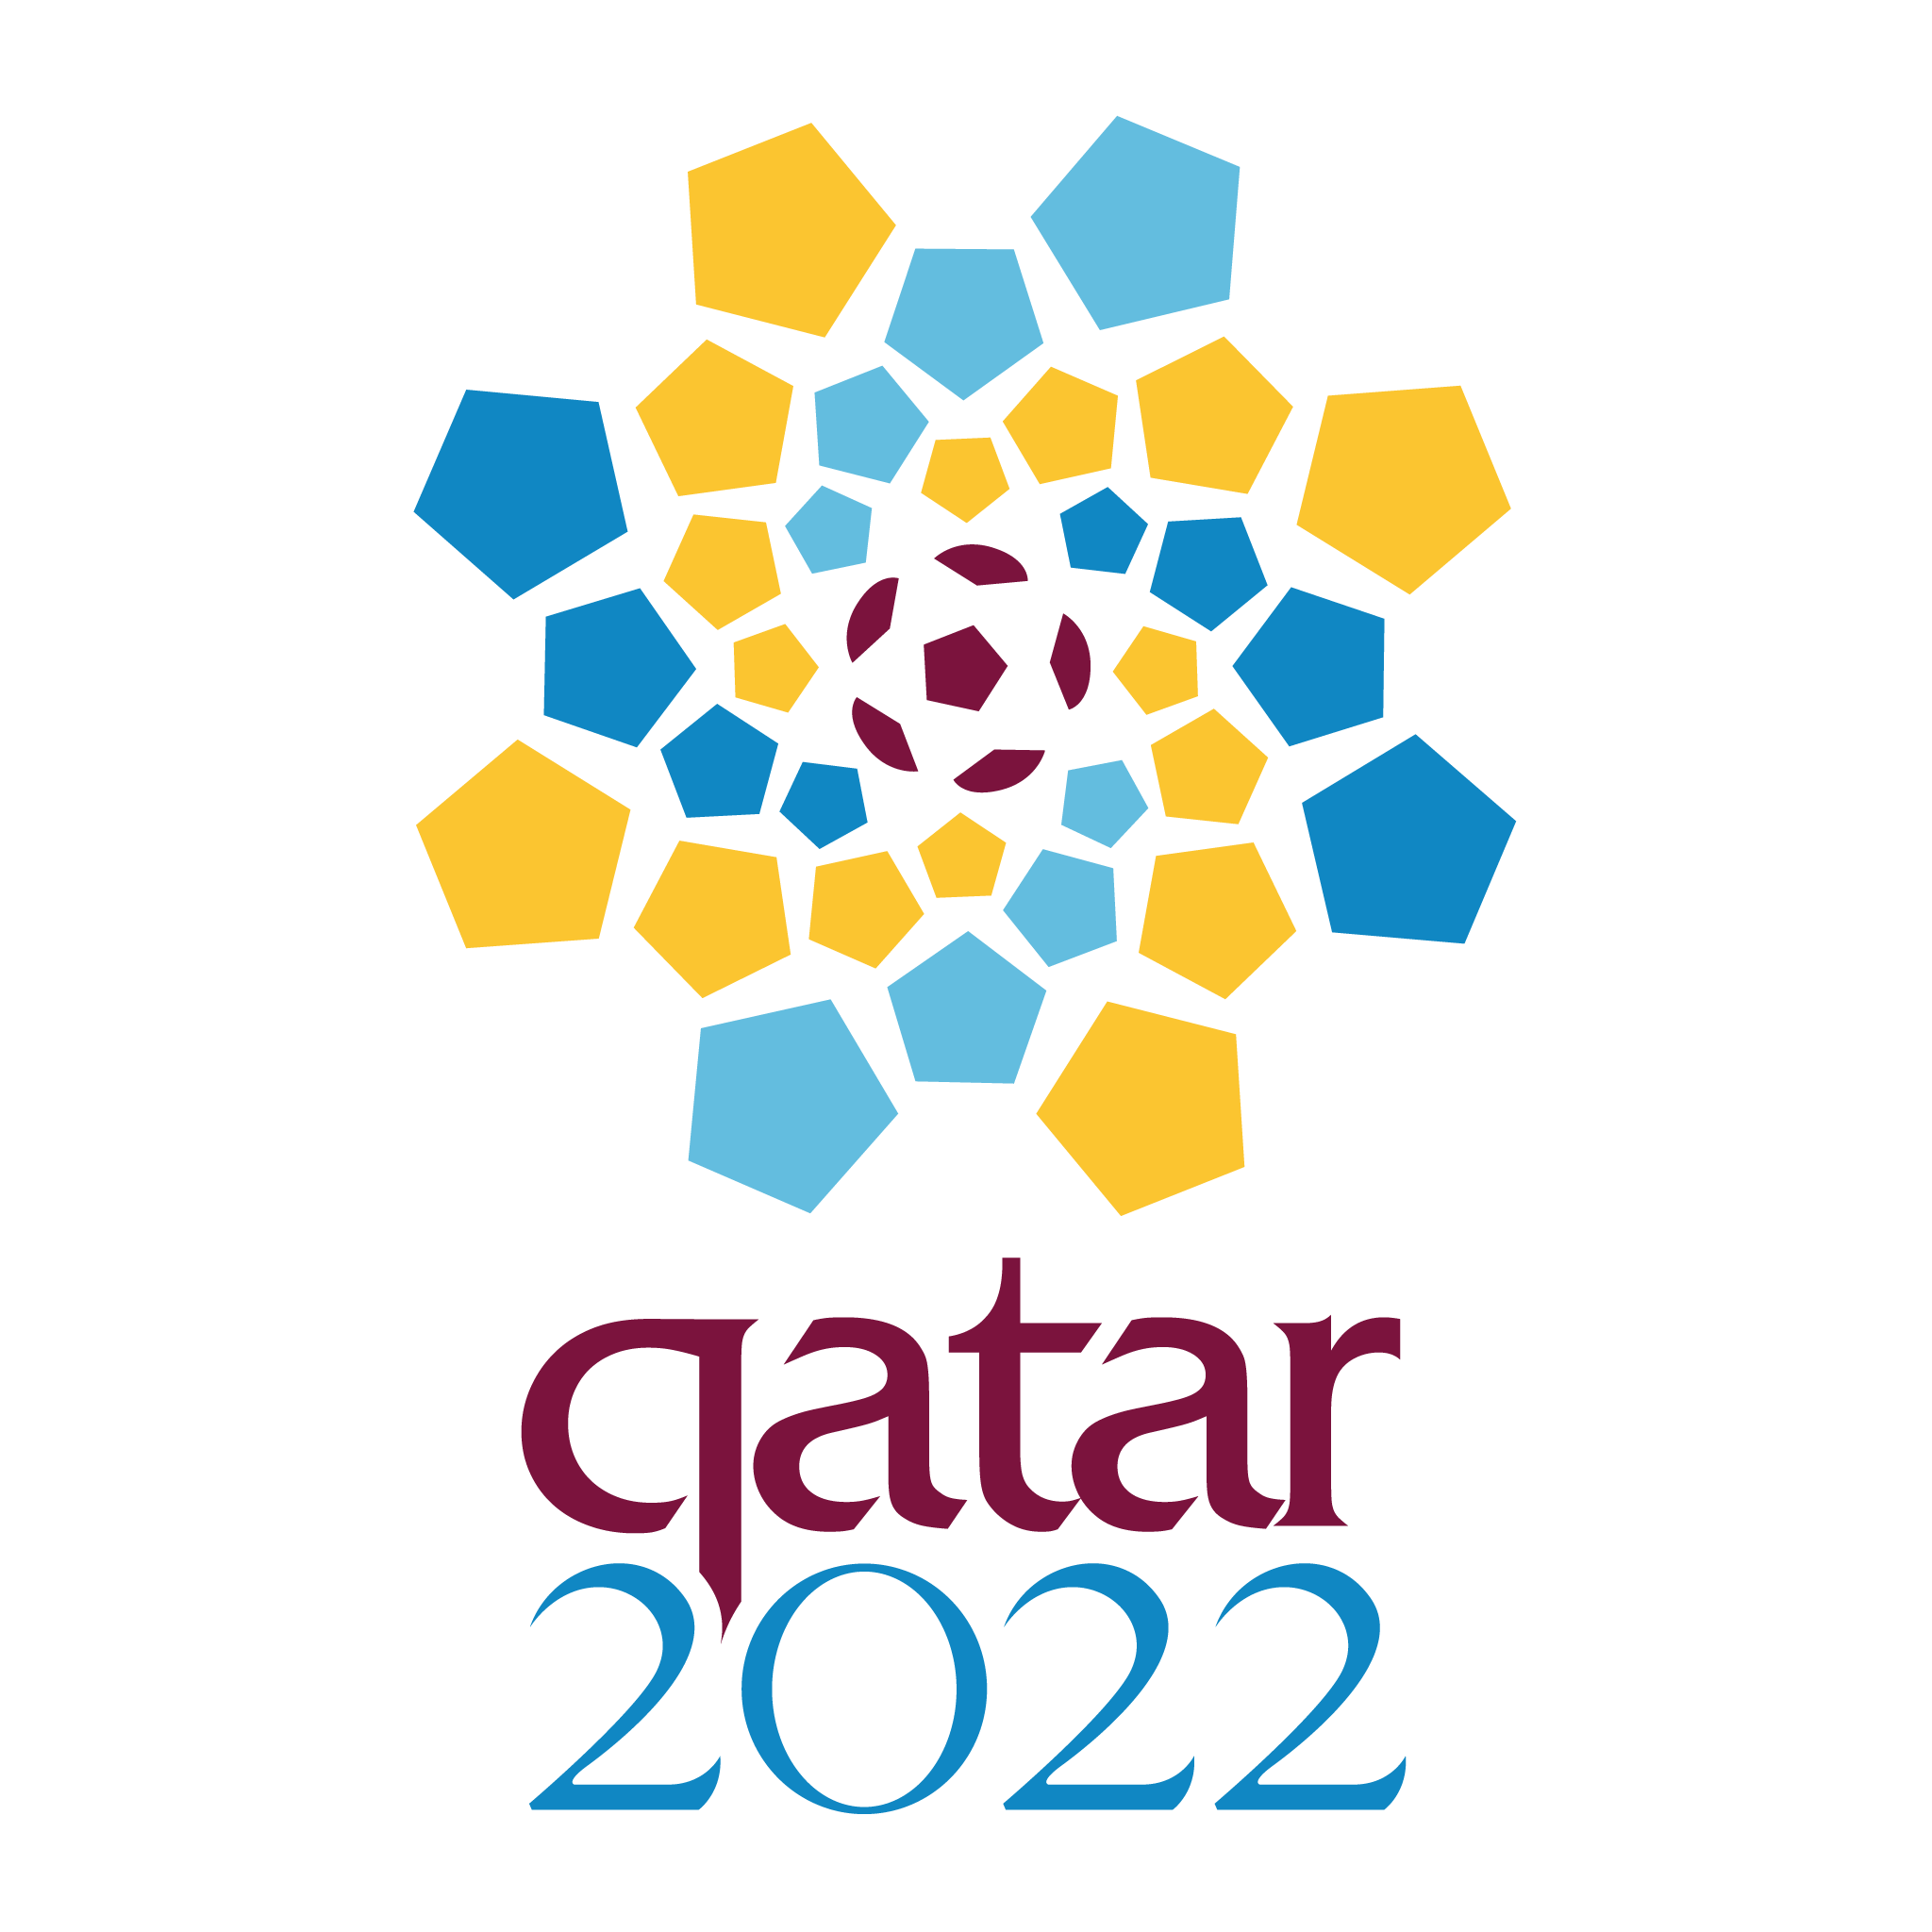 brasao do copa do mundo qatar 2022